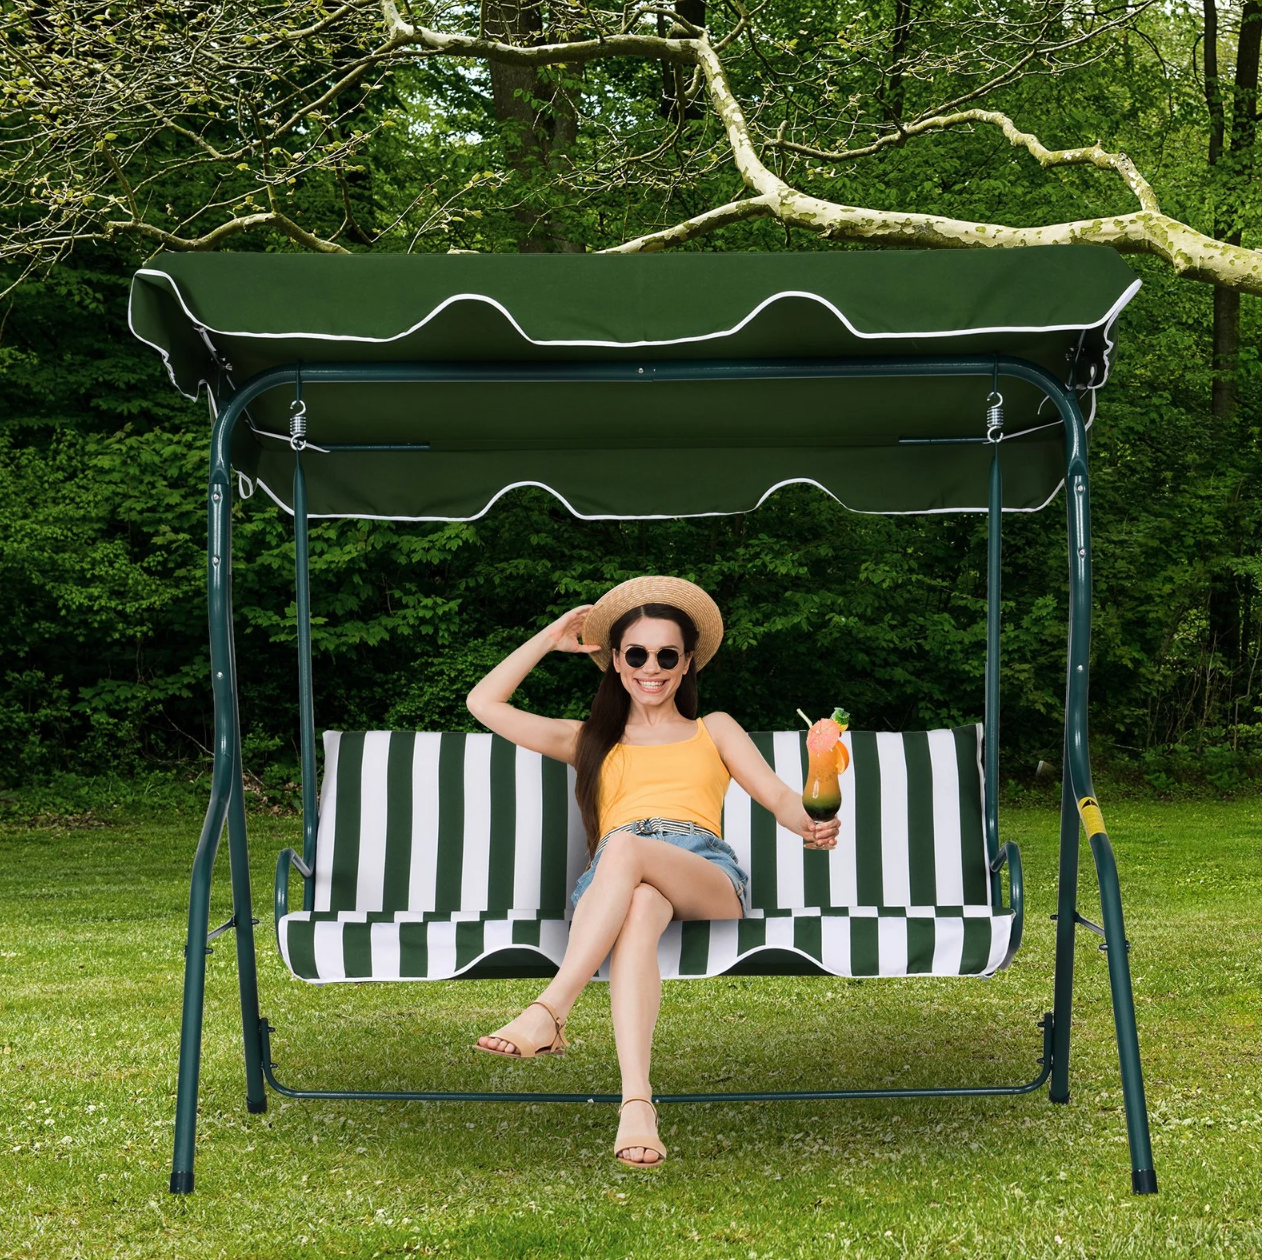 Nancy's Benbrook Garden Swing - Swing Bench - Auvent réglable - Métal - Vert - Blanc - Polyester - Mousse -